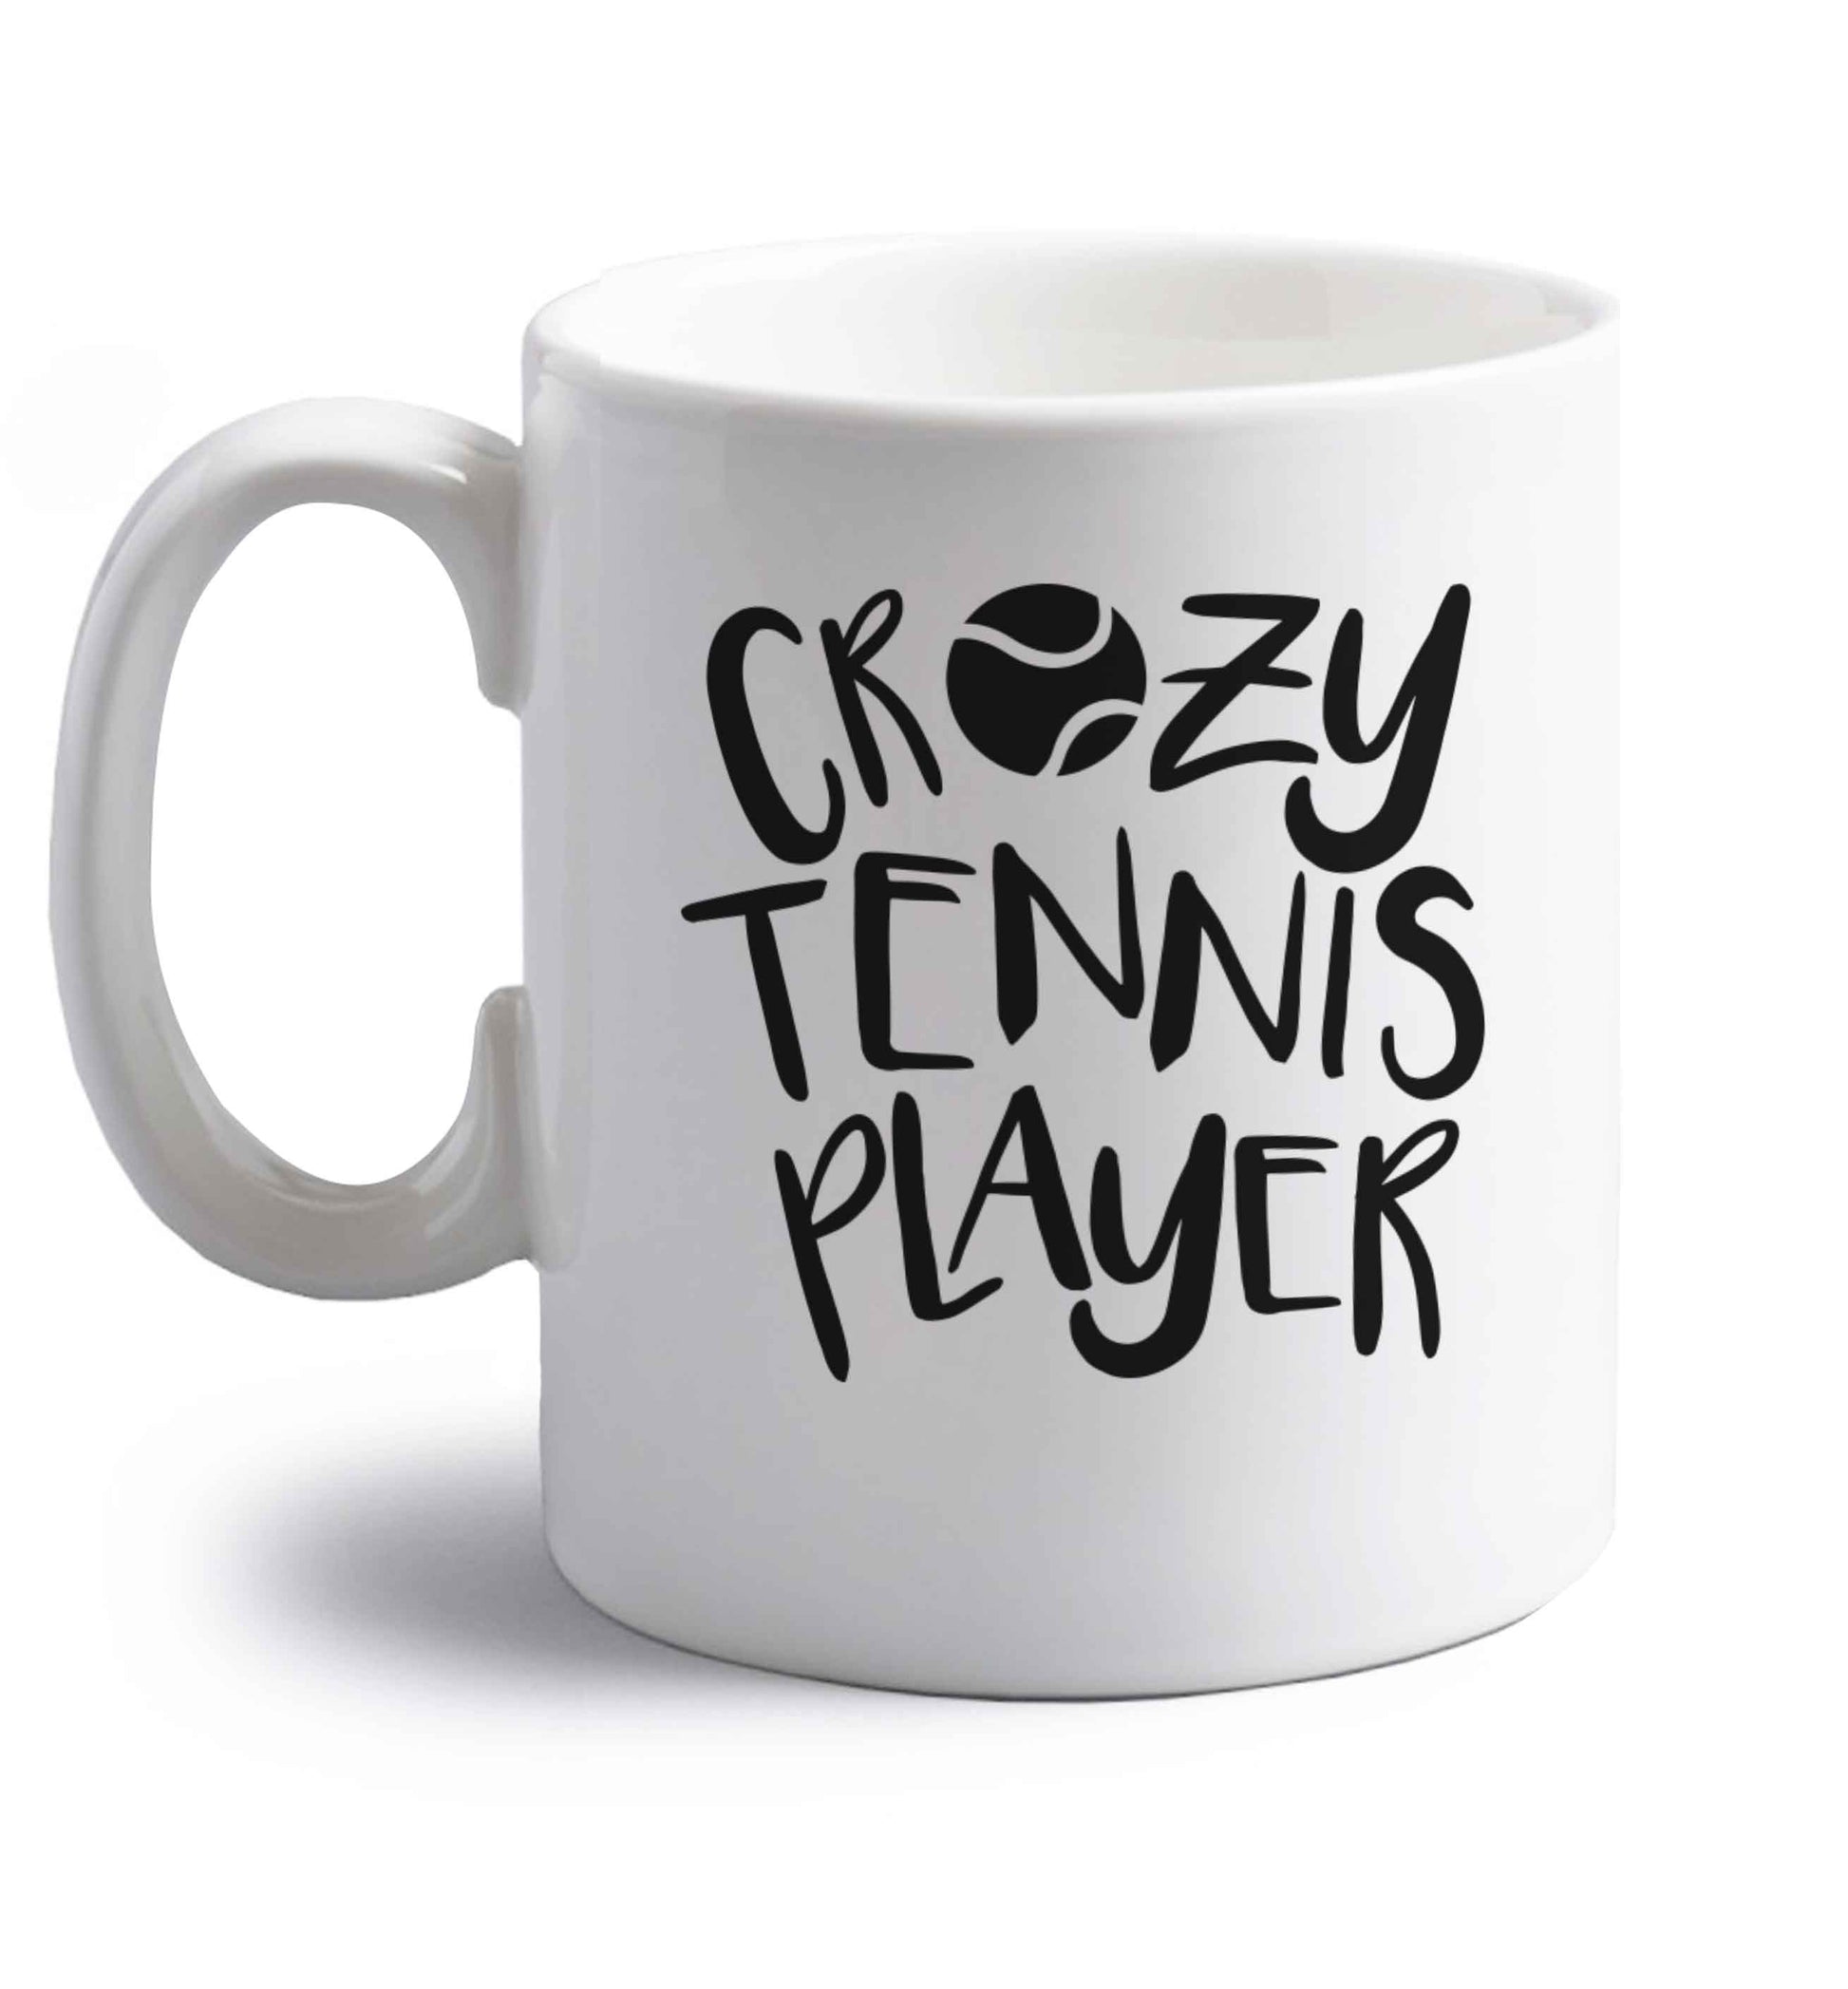 Crazy tennis player right handed white ceramic mug 